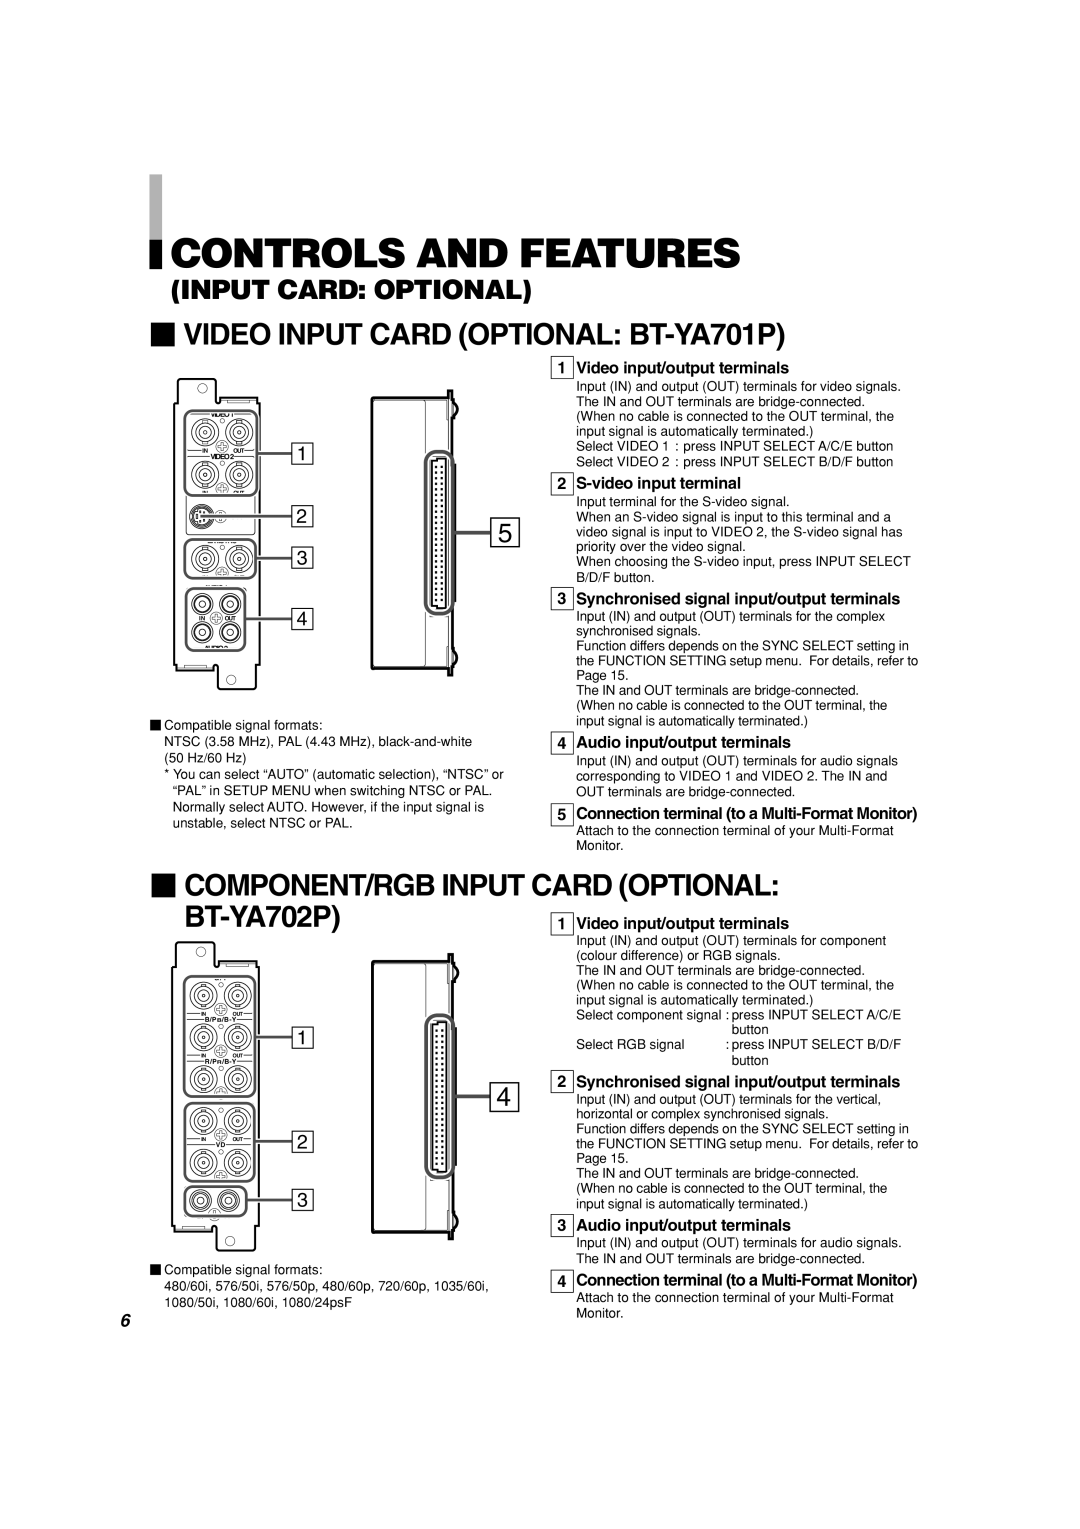 Panasonic BT-H1700AE manual  VIDEO INPUT CARD OPTIONAL BT-YA701P,  Component/Rgb Input Card Optional, BT-YA702P 